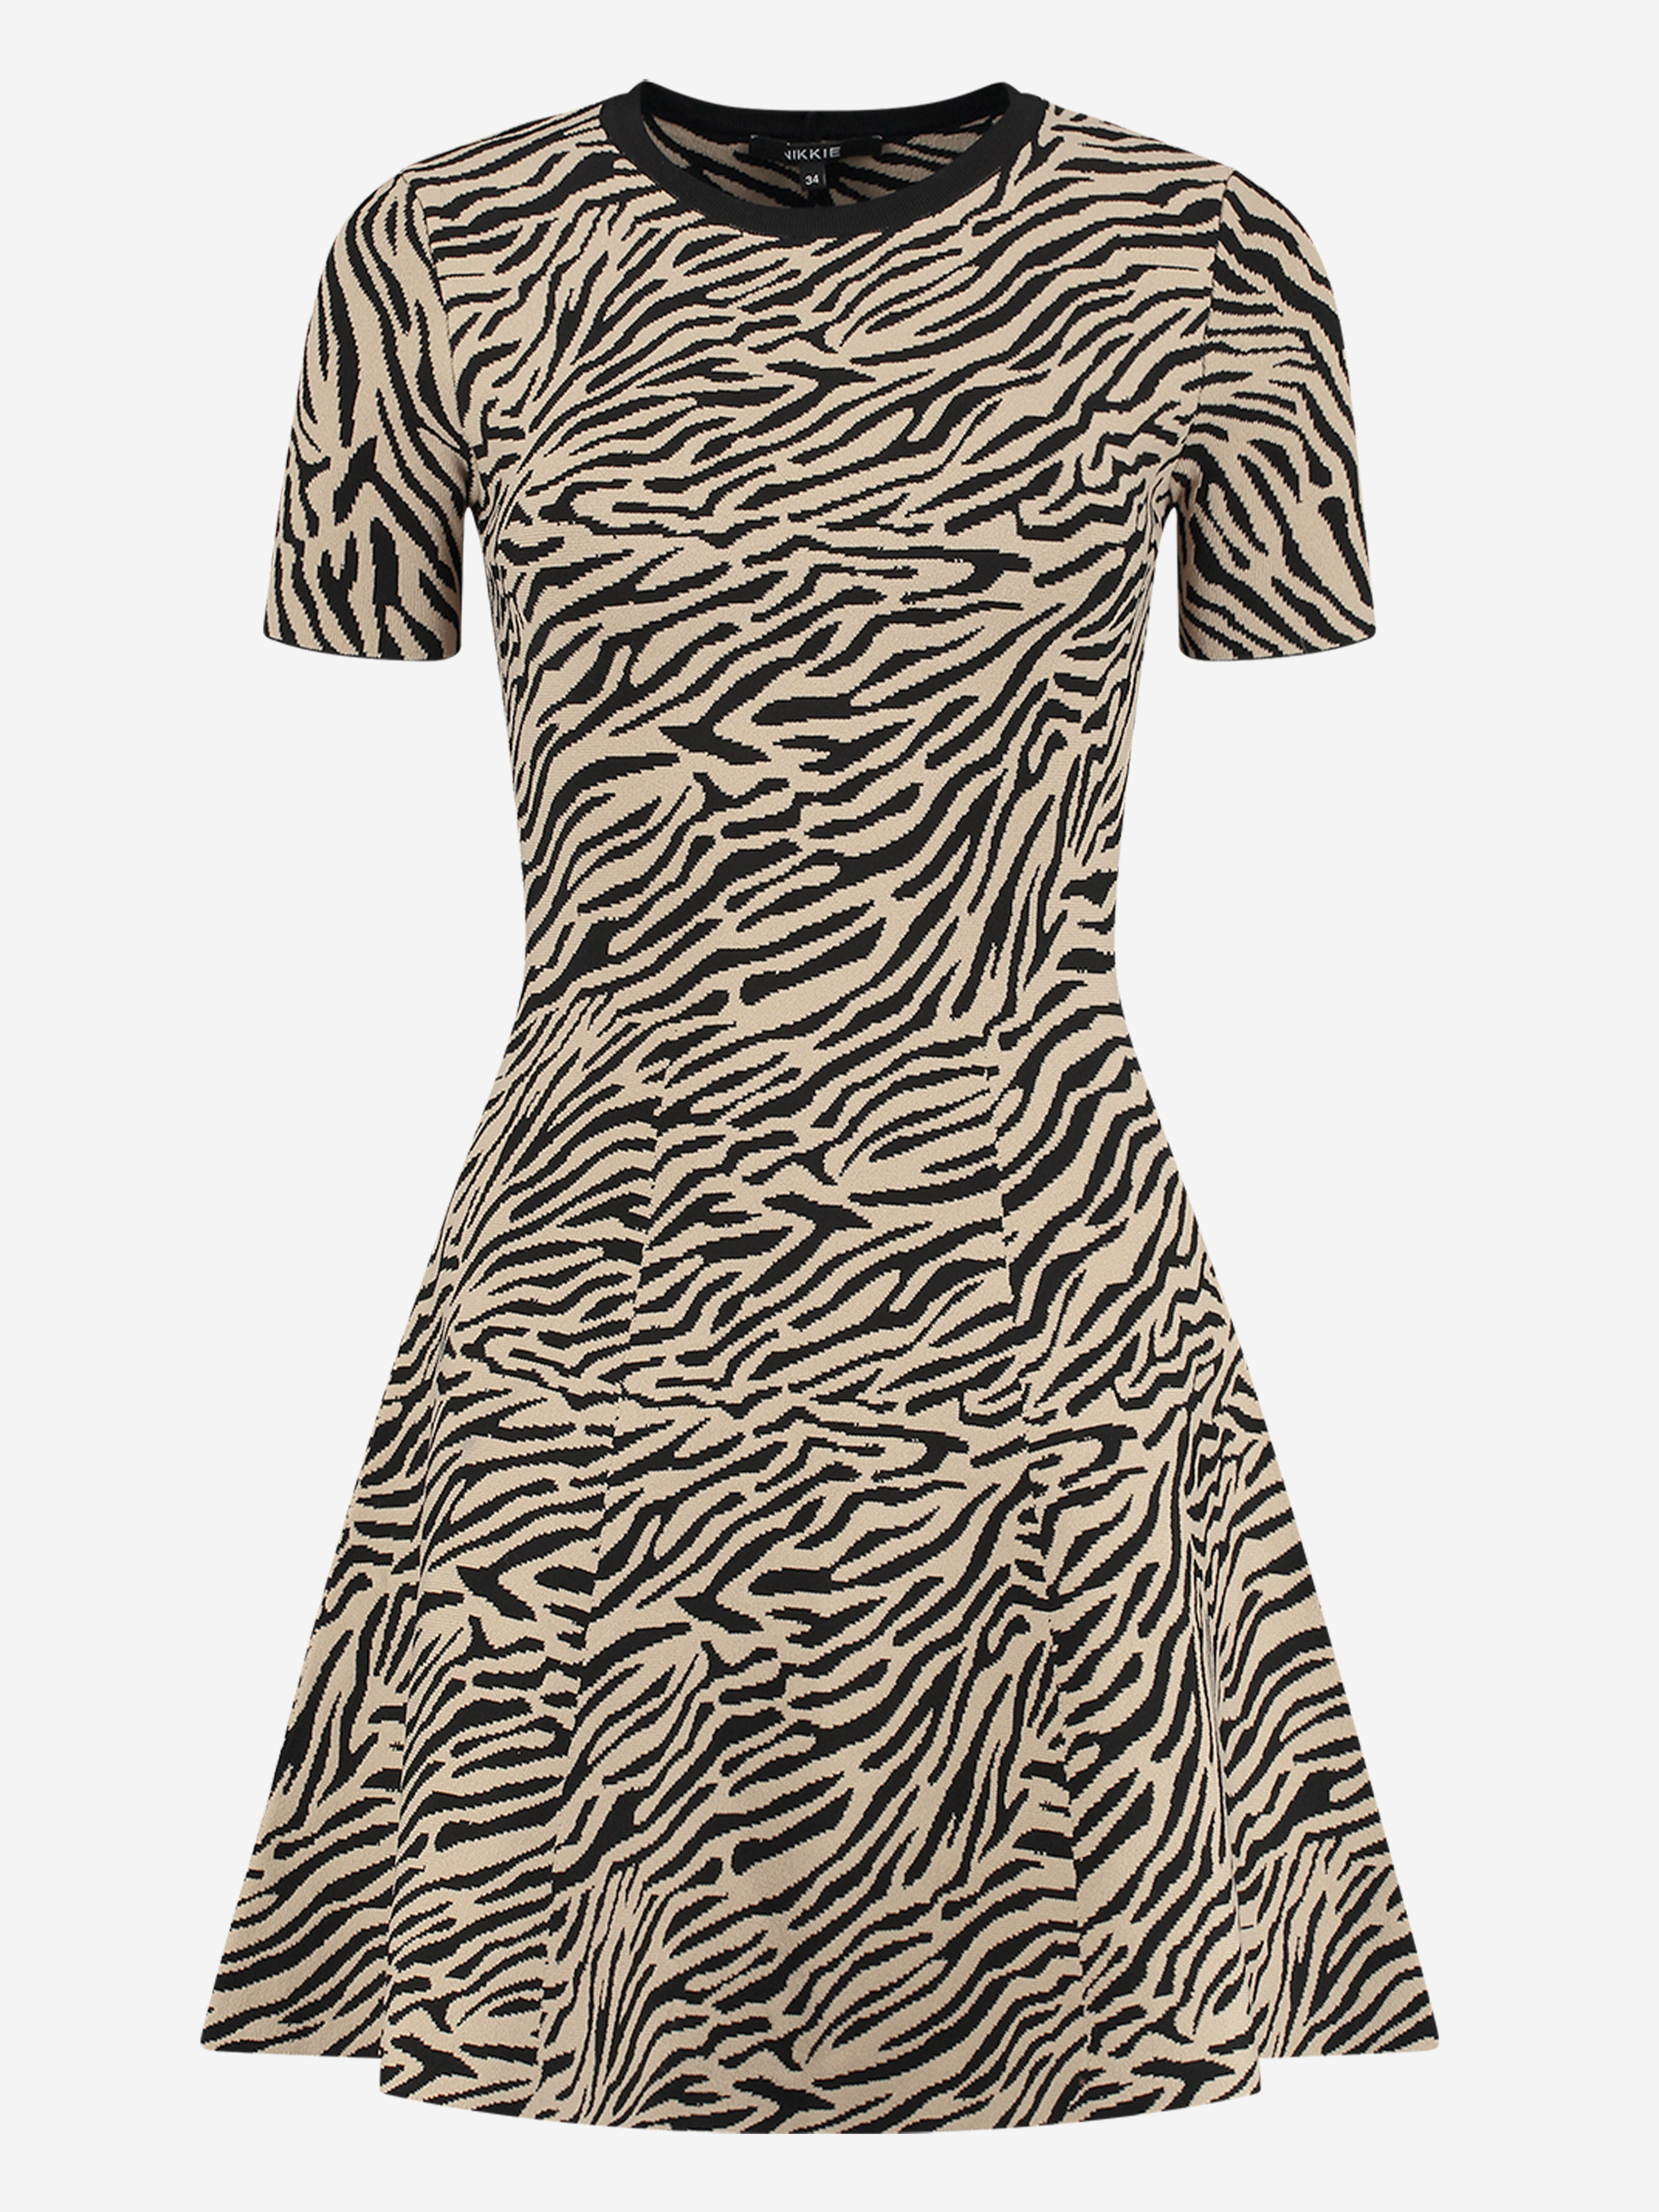 Ventura Zebra Dress